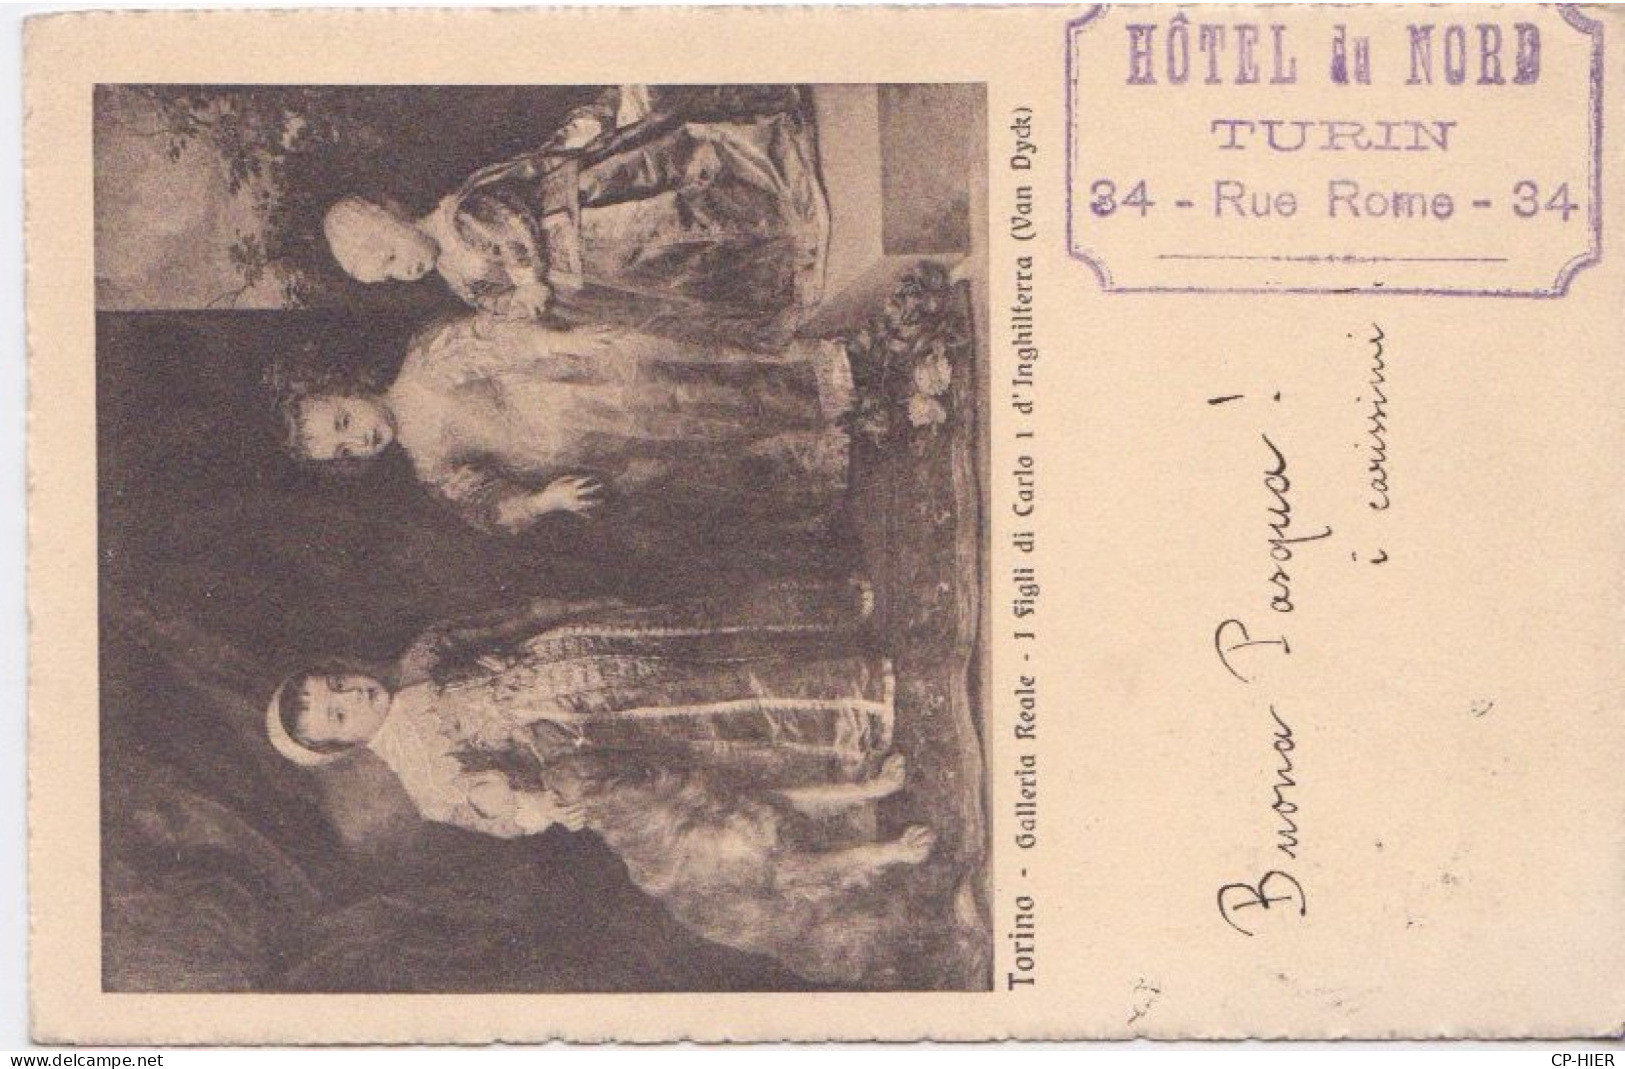 1908 - ITALIE - ITALIA - SICILIA - TORINO - CACHET HOTEL DU NORD DE TURIN  34 RUE DE ROME - Bares, Hoteles Y Restaurantes